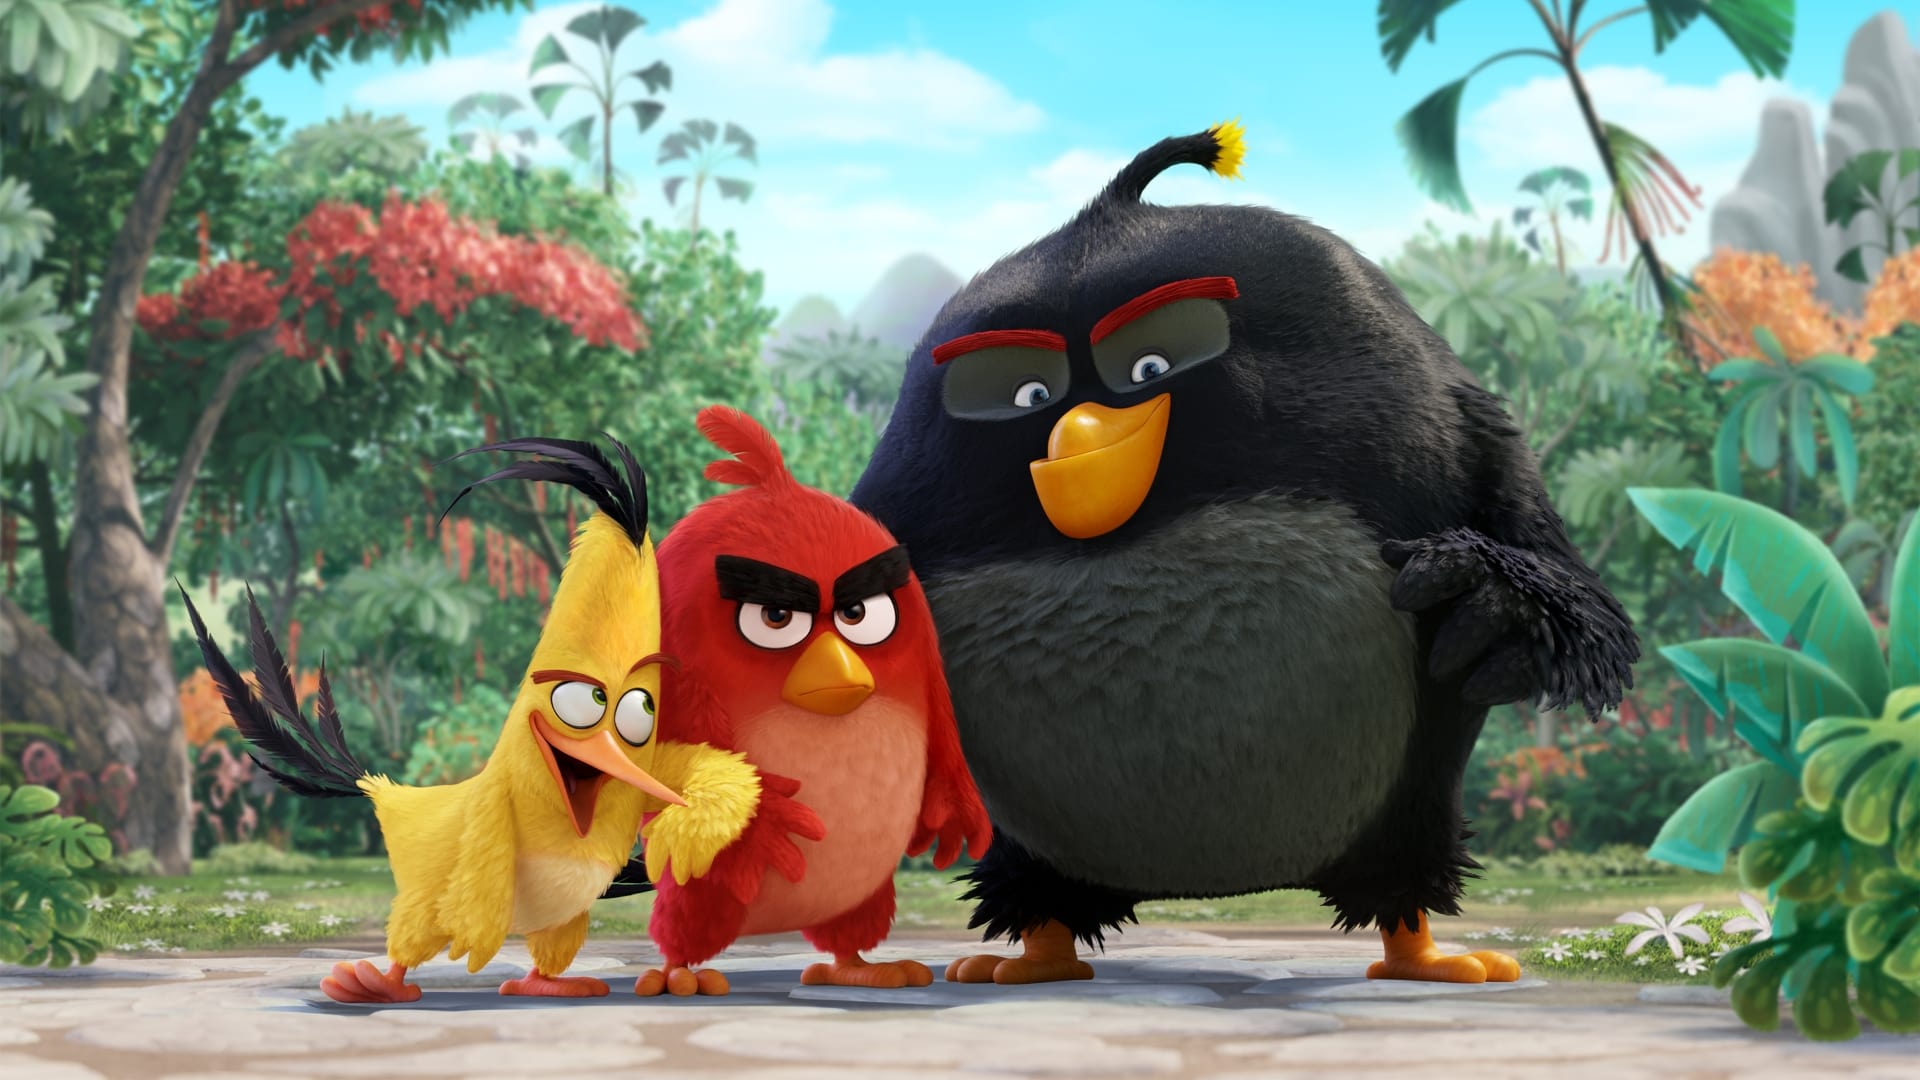 Angry Birds vo filme (2016)